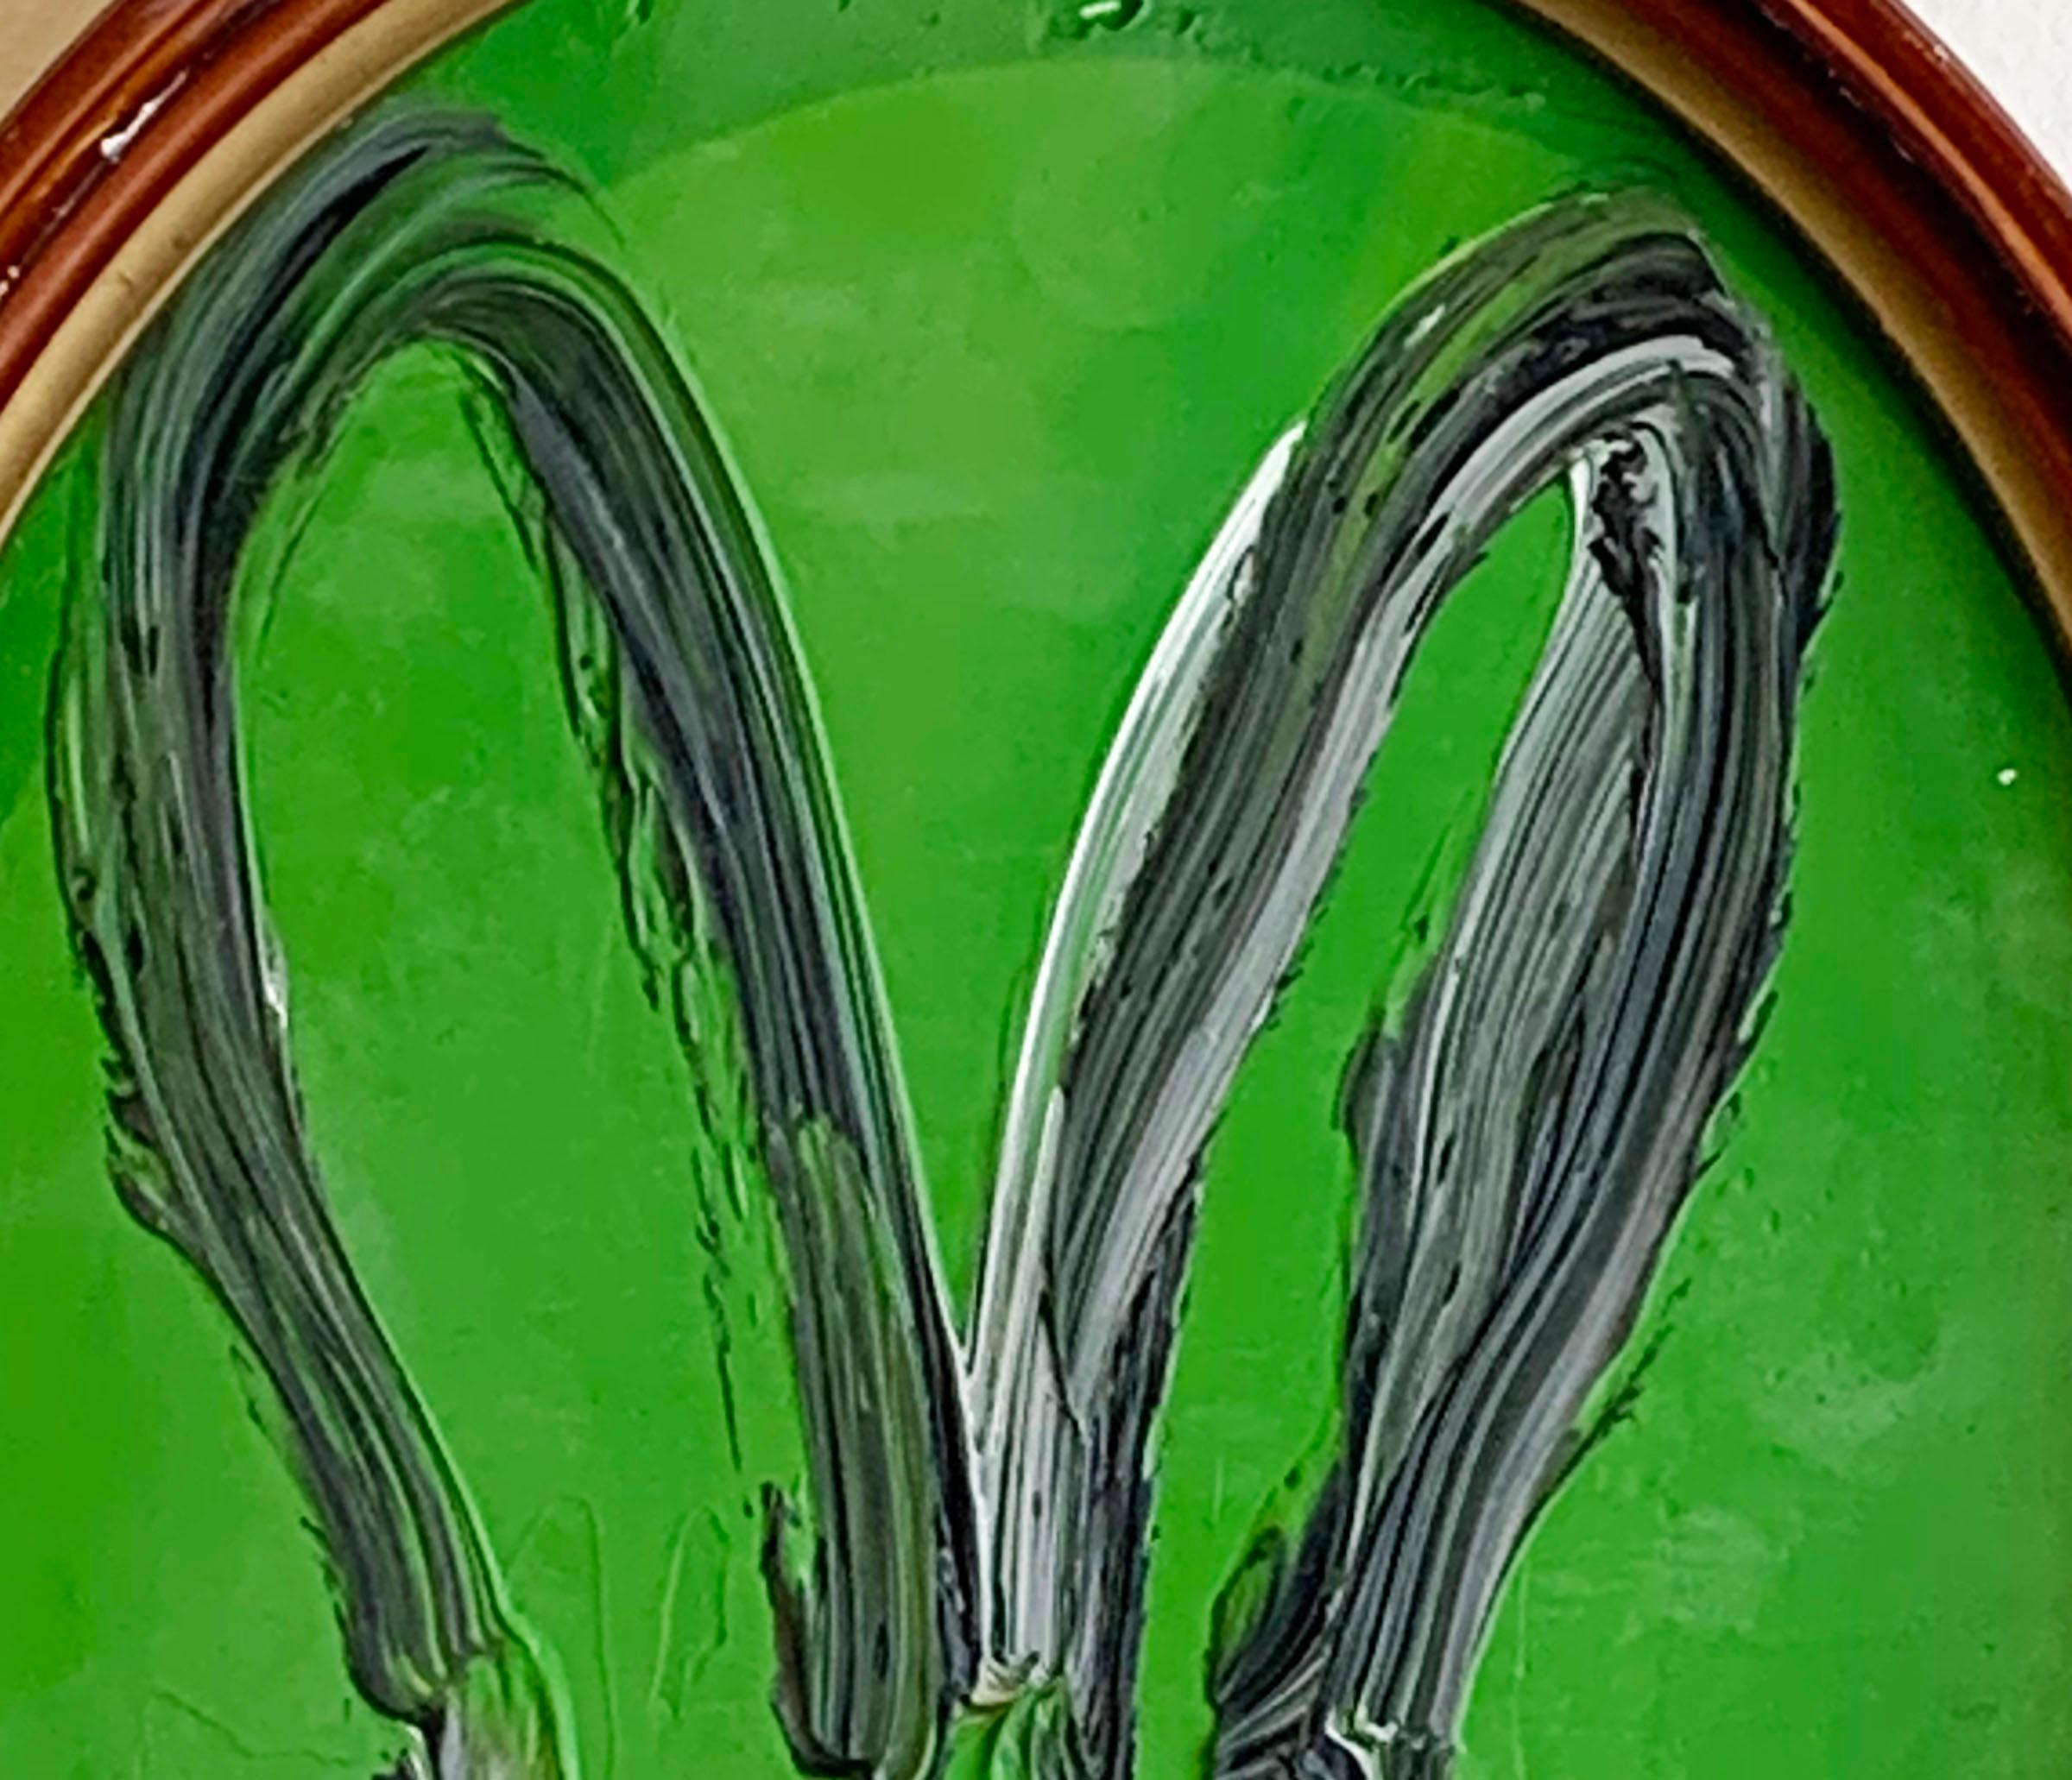 Untitled (black outline on green oval bunny portrait) - Painting by Hunt Slonem